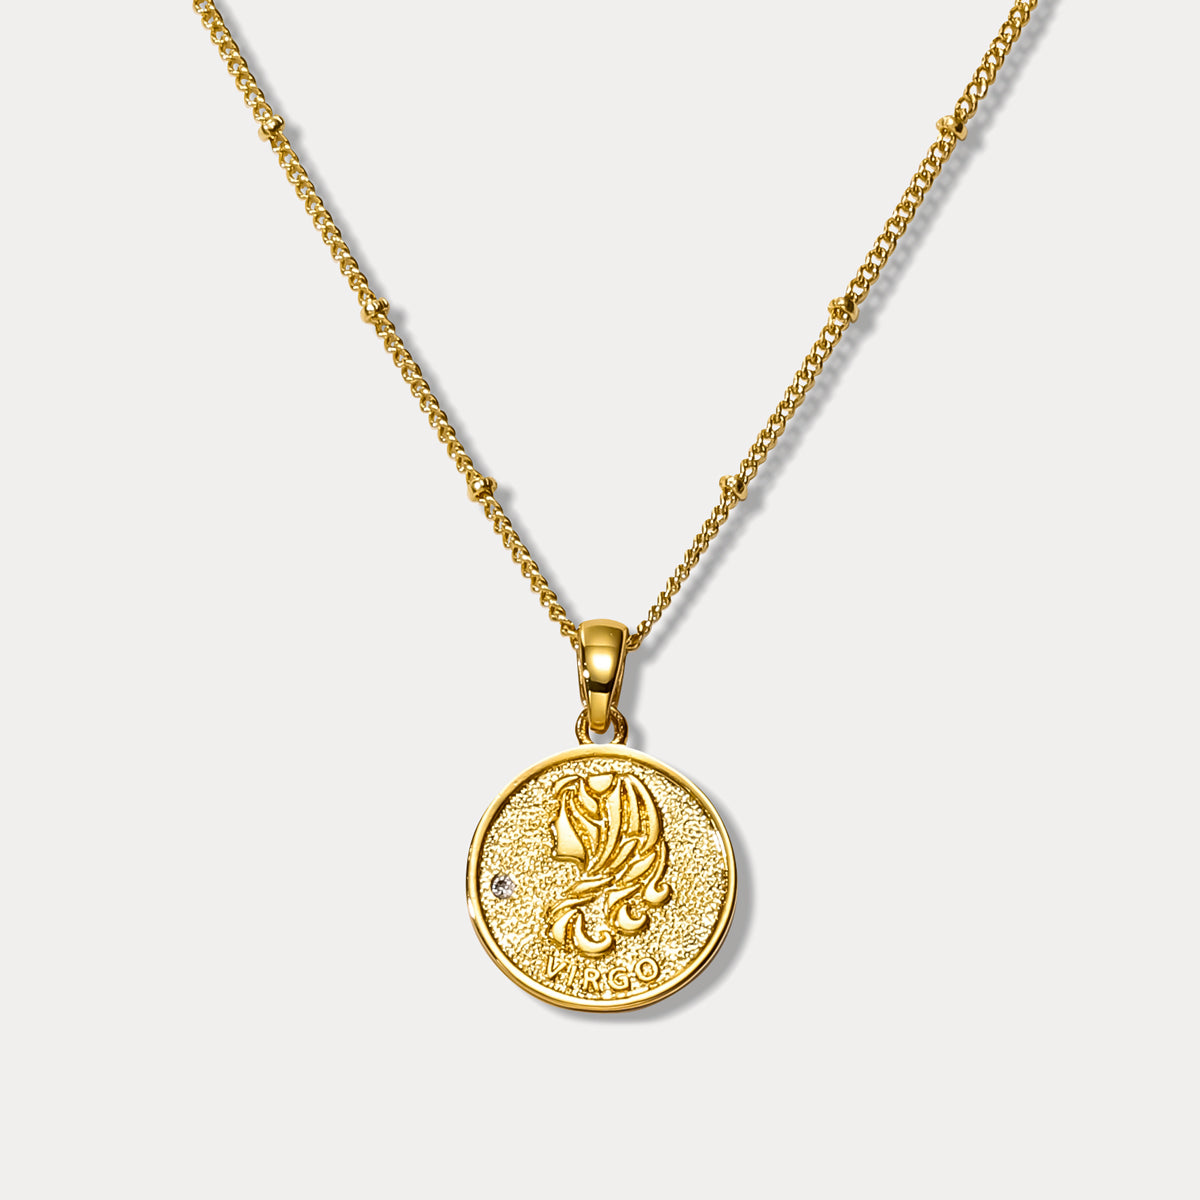 Virgo Constellation Coin Pendant Necklace